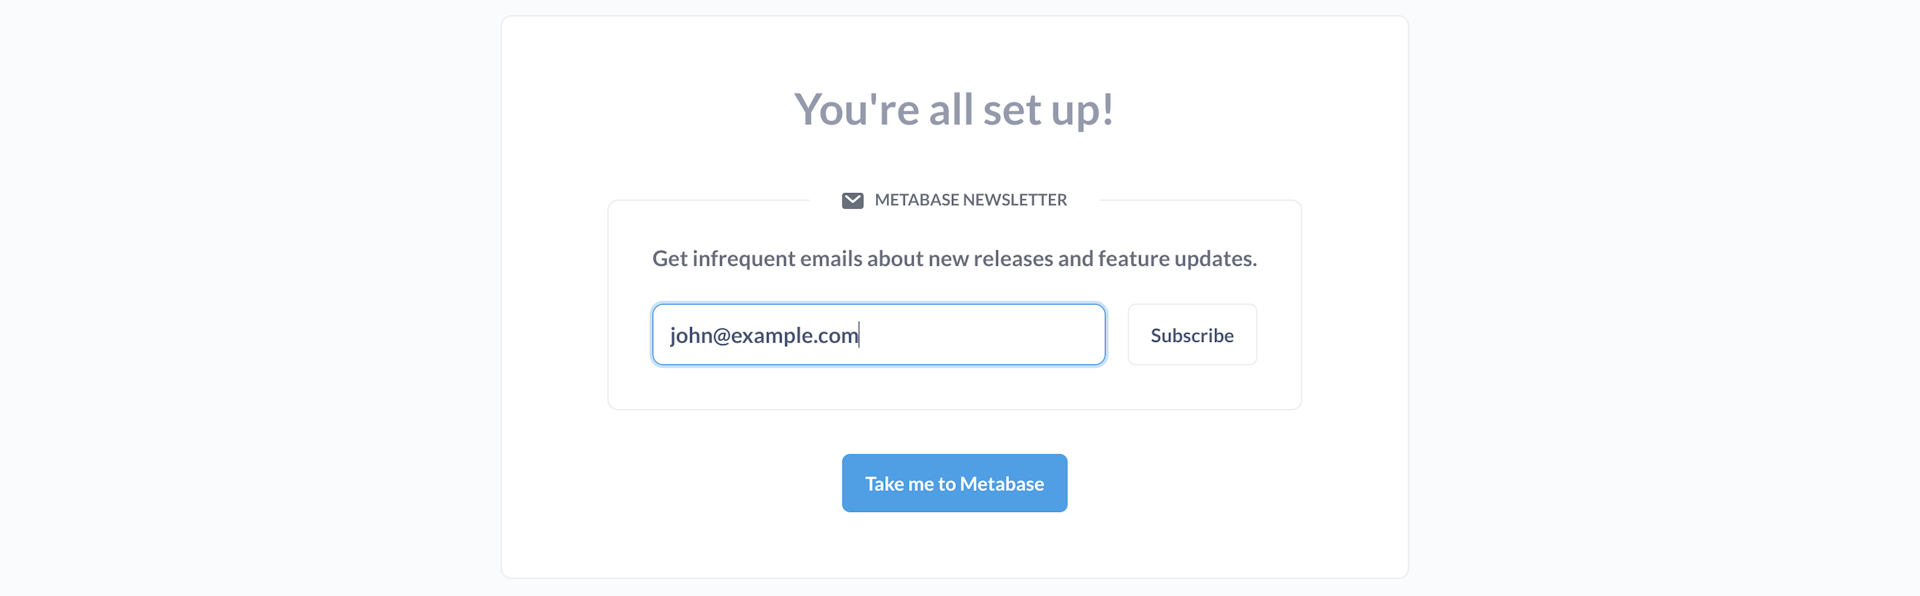 Metabase newsletter